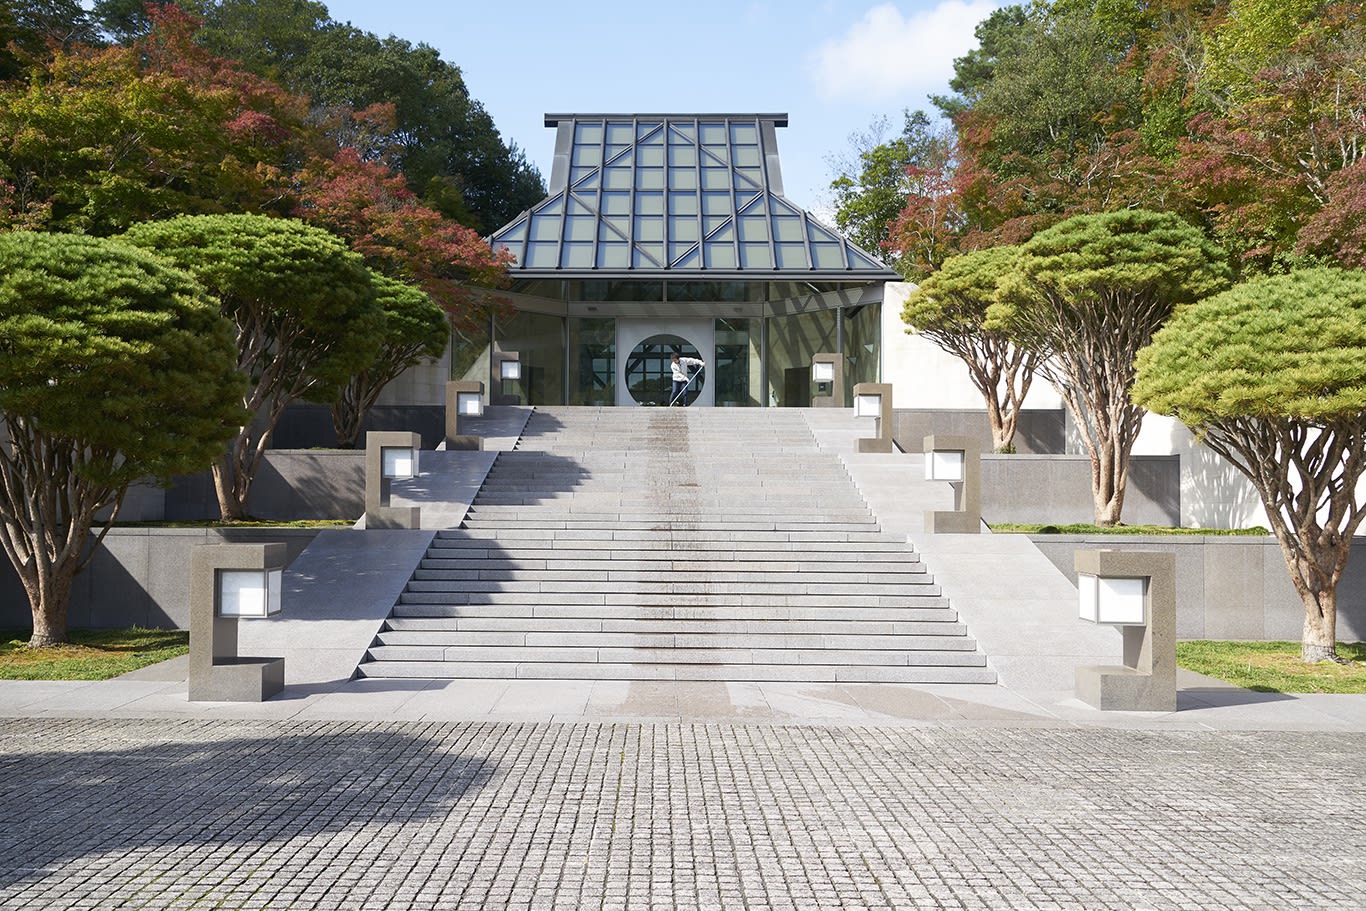 MIHO MUSEUM Japan, MIHO MUSEUM Entrance, 2016